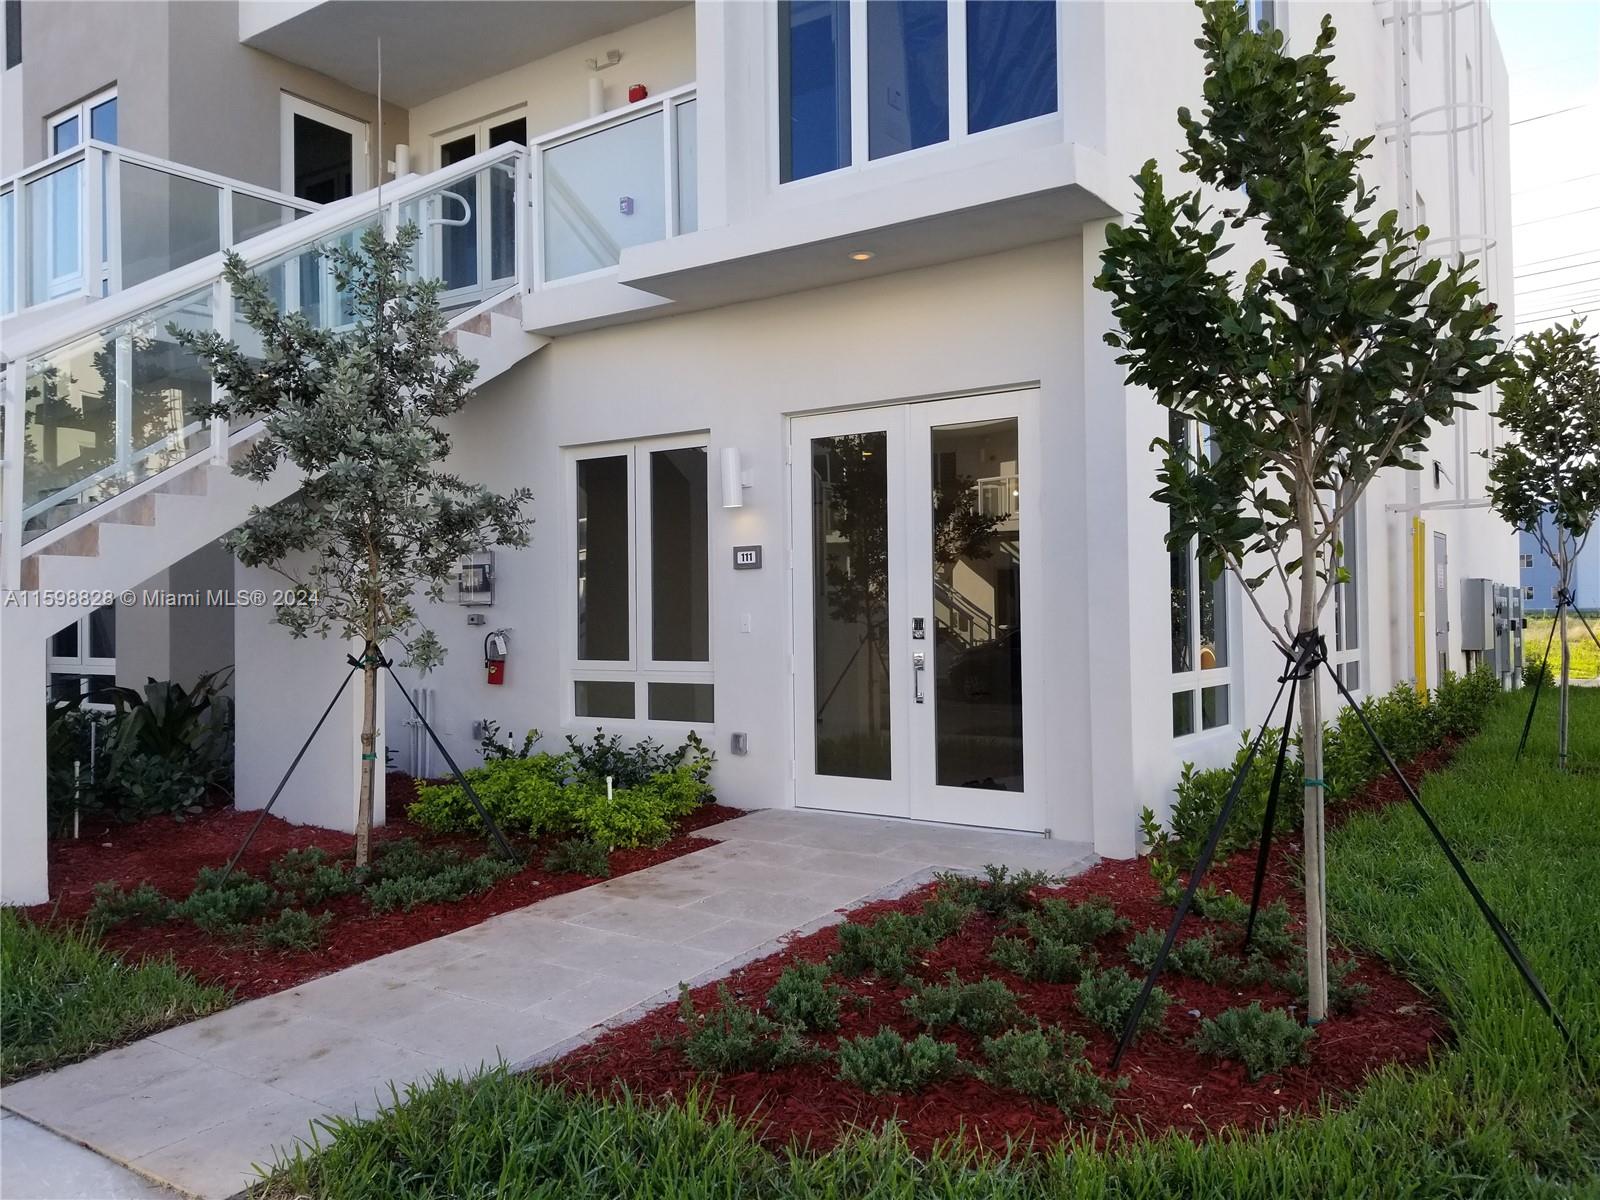 Rental Property at 10220 Nw 63rd Ter 111, Doral, Miami-Dade County, Florida - Bedrooms: 3 
Bathrooms: 2  - $3,400 MO.